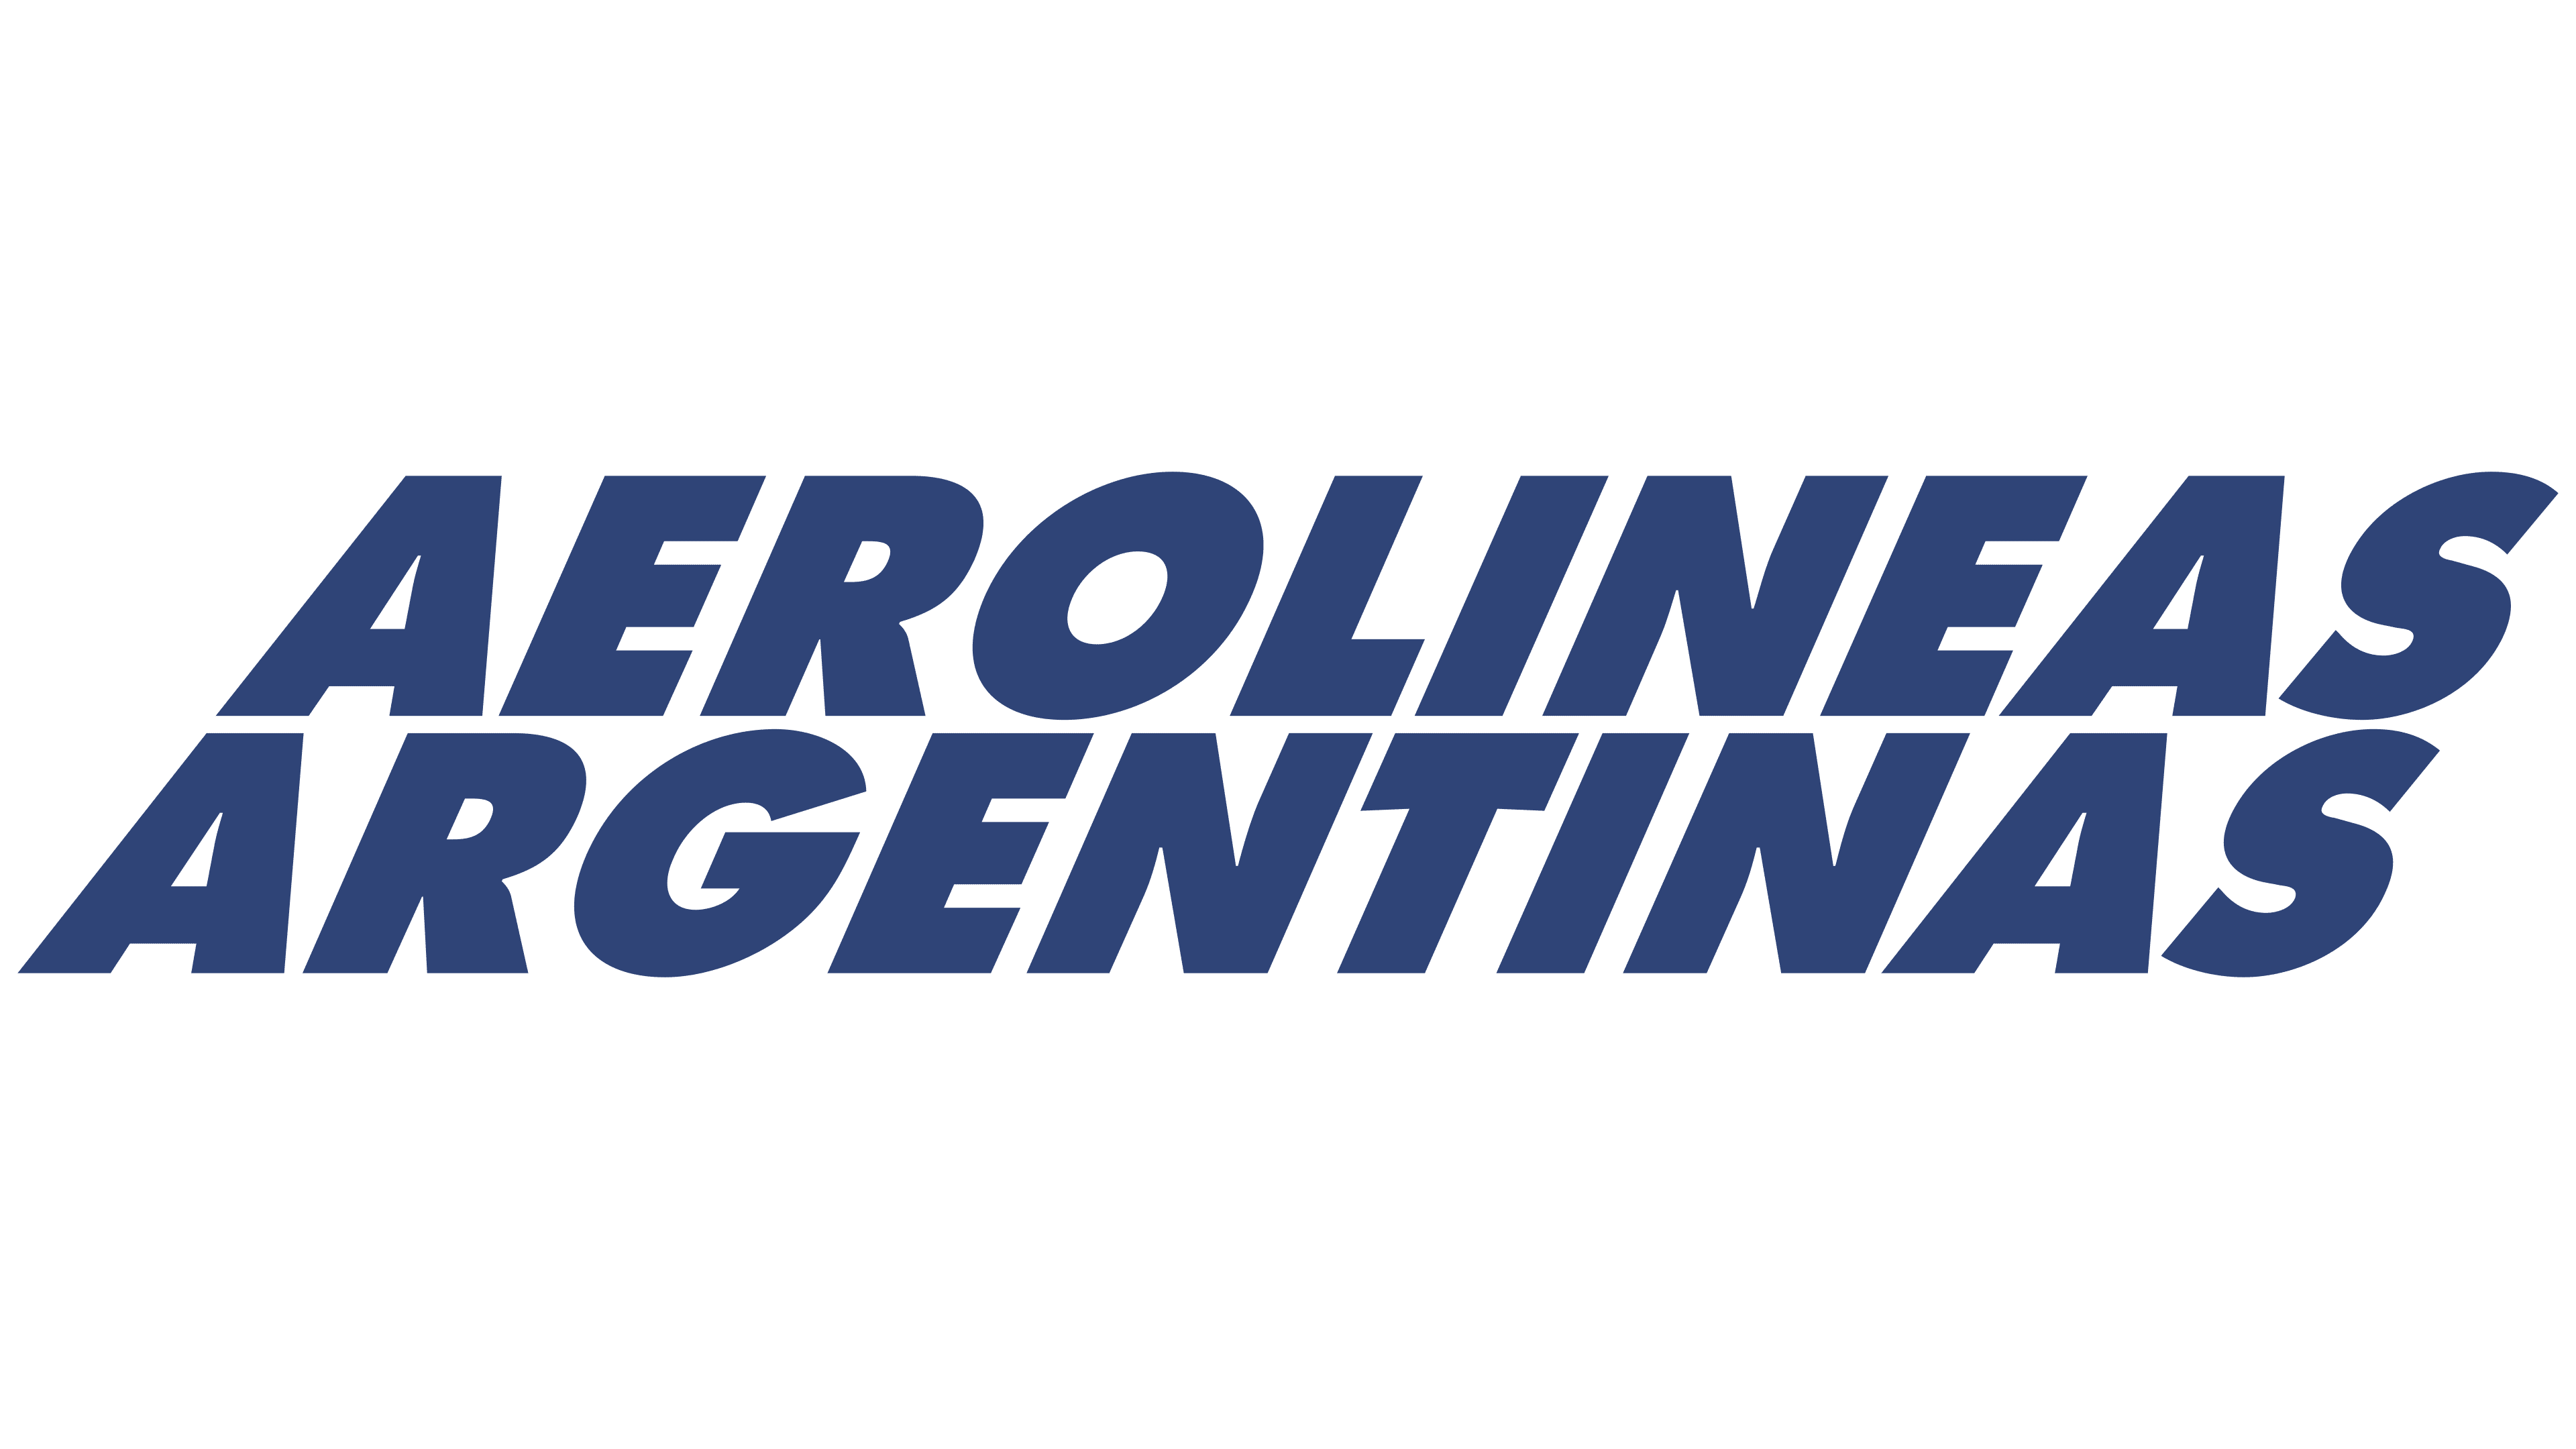 Aerolíneas Argentinas Logo, symbol, meaning, history, PNG, brand